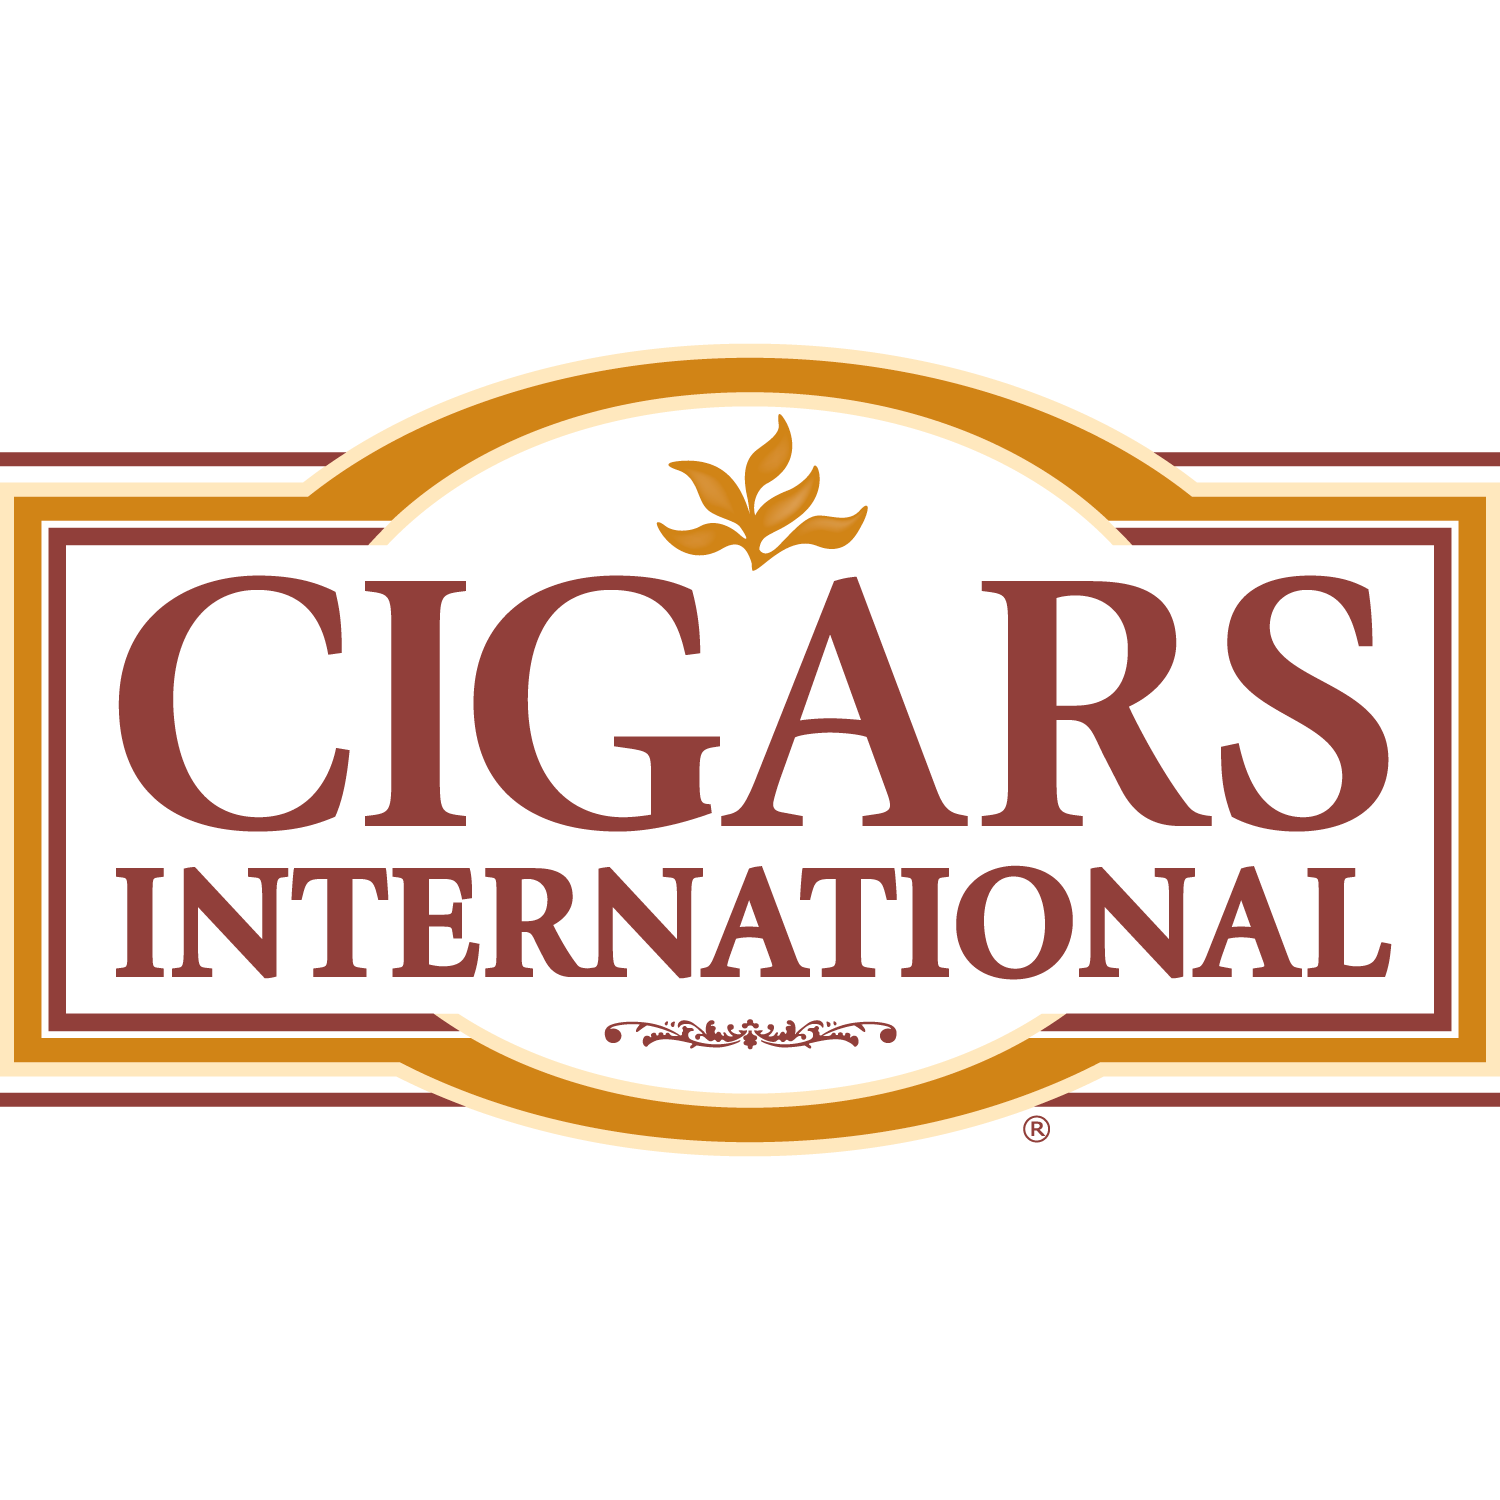 www.cigarsinternational.com